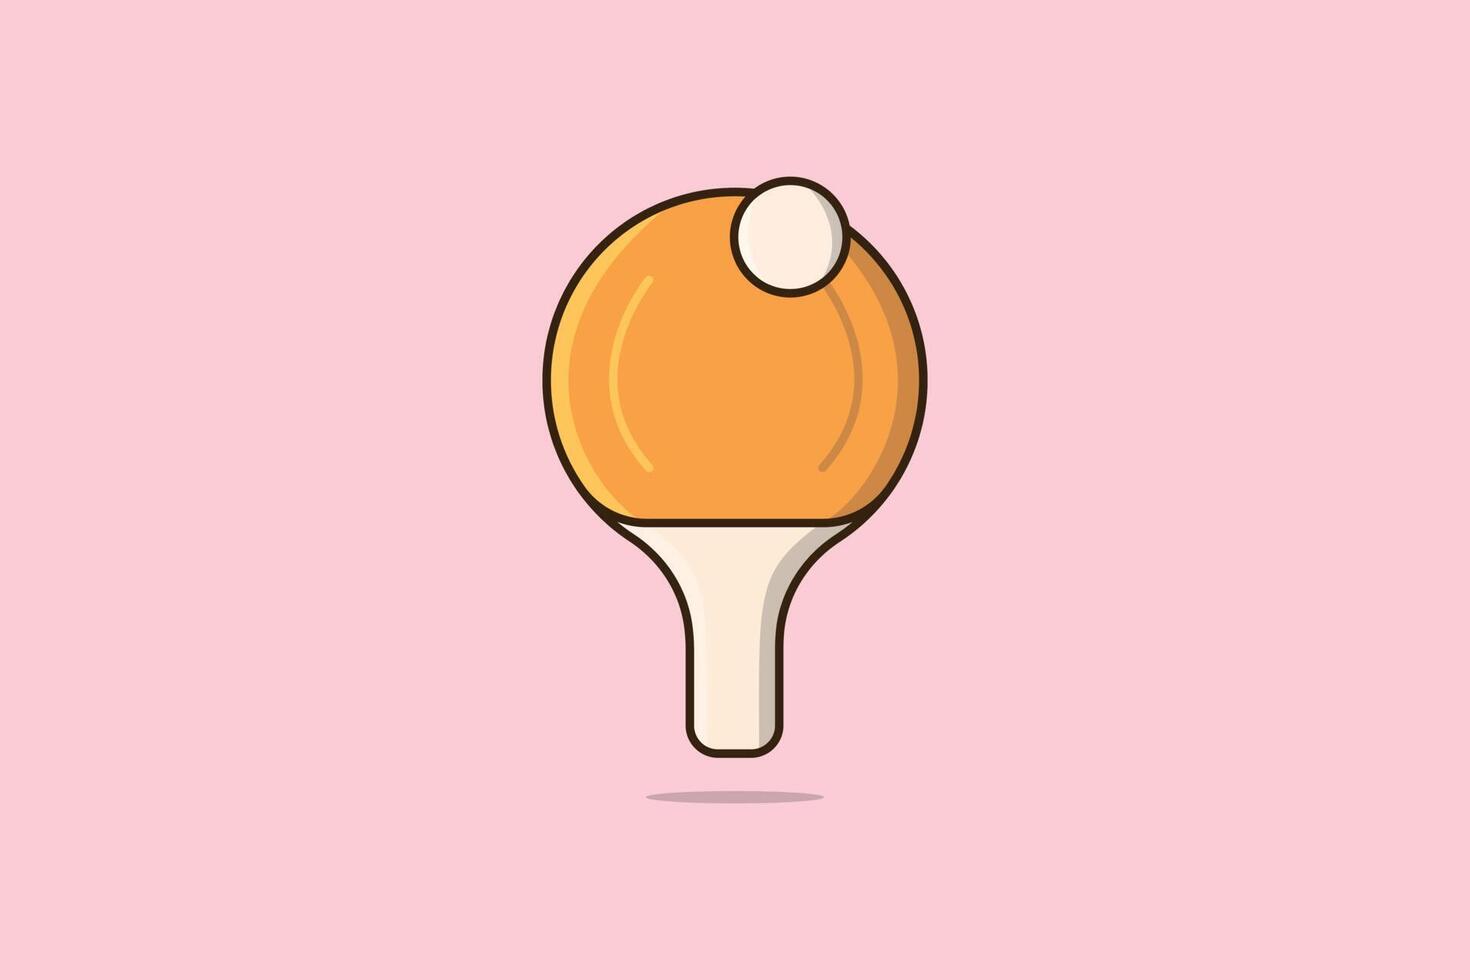 raqueta de tenis de mesa e ilustración vectorial de pelota. concepto de icono de objetos deportivos. raqueta para jugar al tenis de mesa. diseño de vector de juego de deporte de ping-pong sobre fondo rosa.